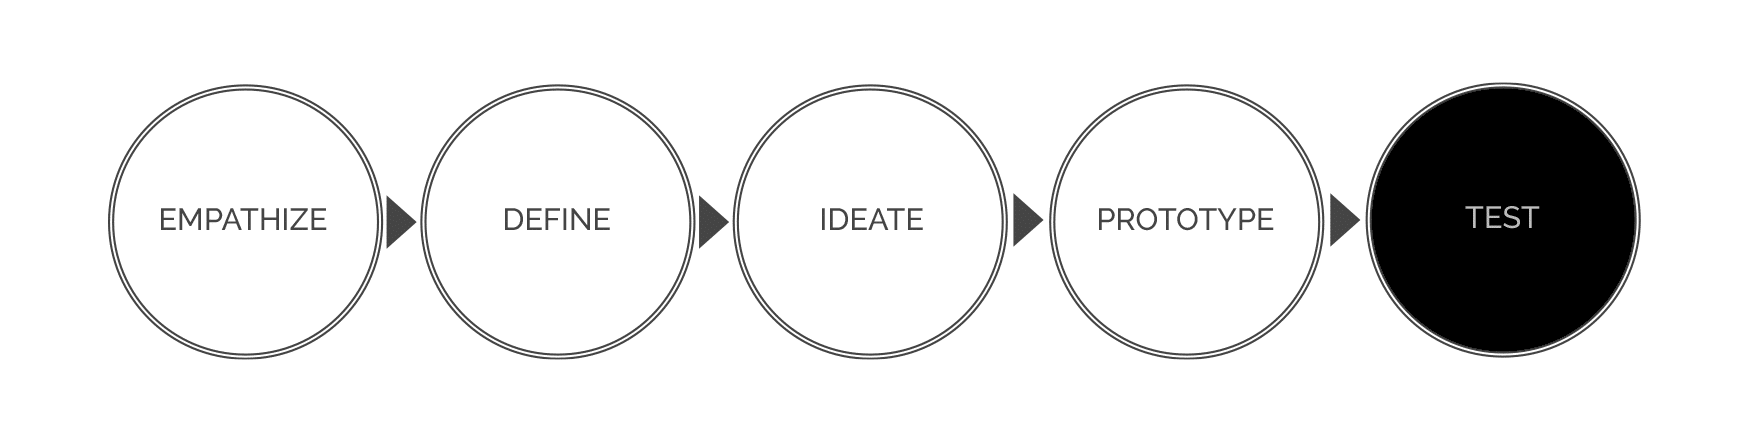 Stappen Design Thinking methode Empathize, Define, Ideate, Prototype, TEST